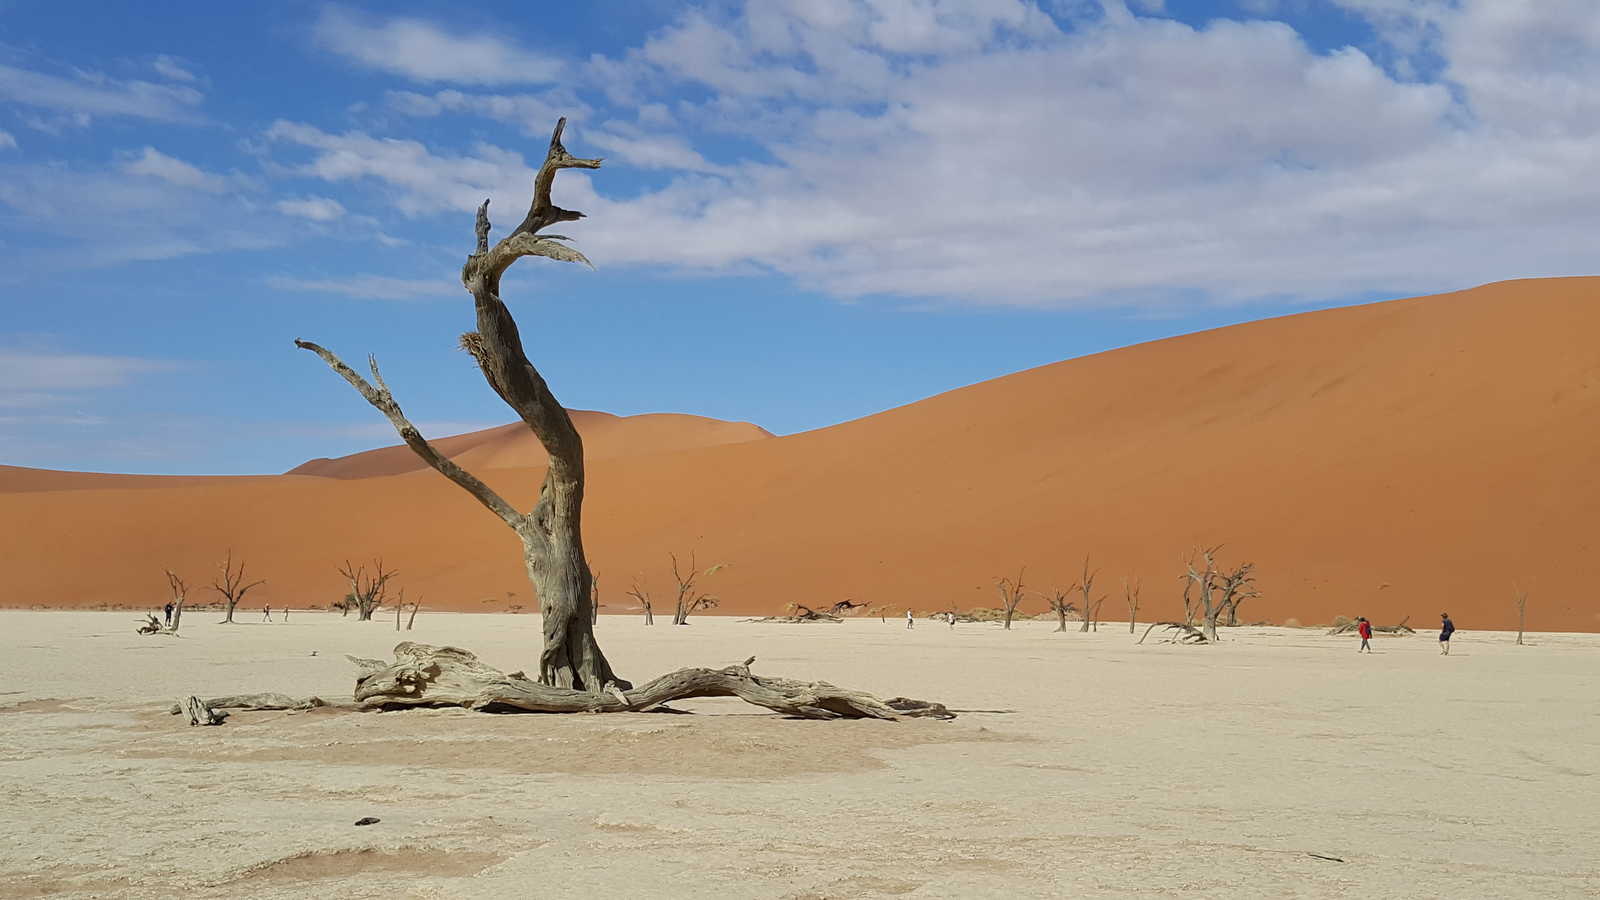 Image Désert du Namib, faune sauvage et peuple Himba